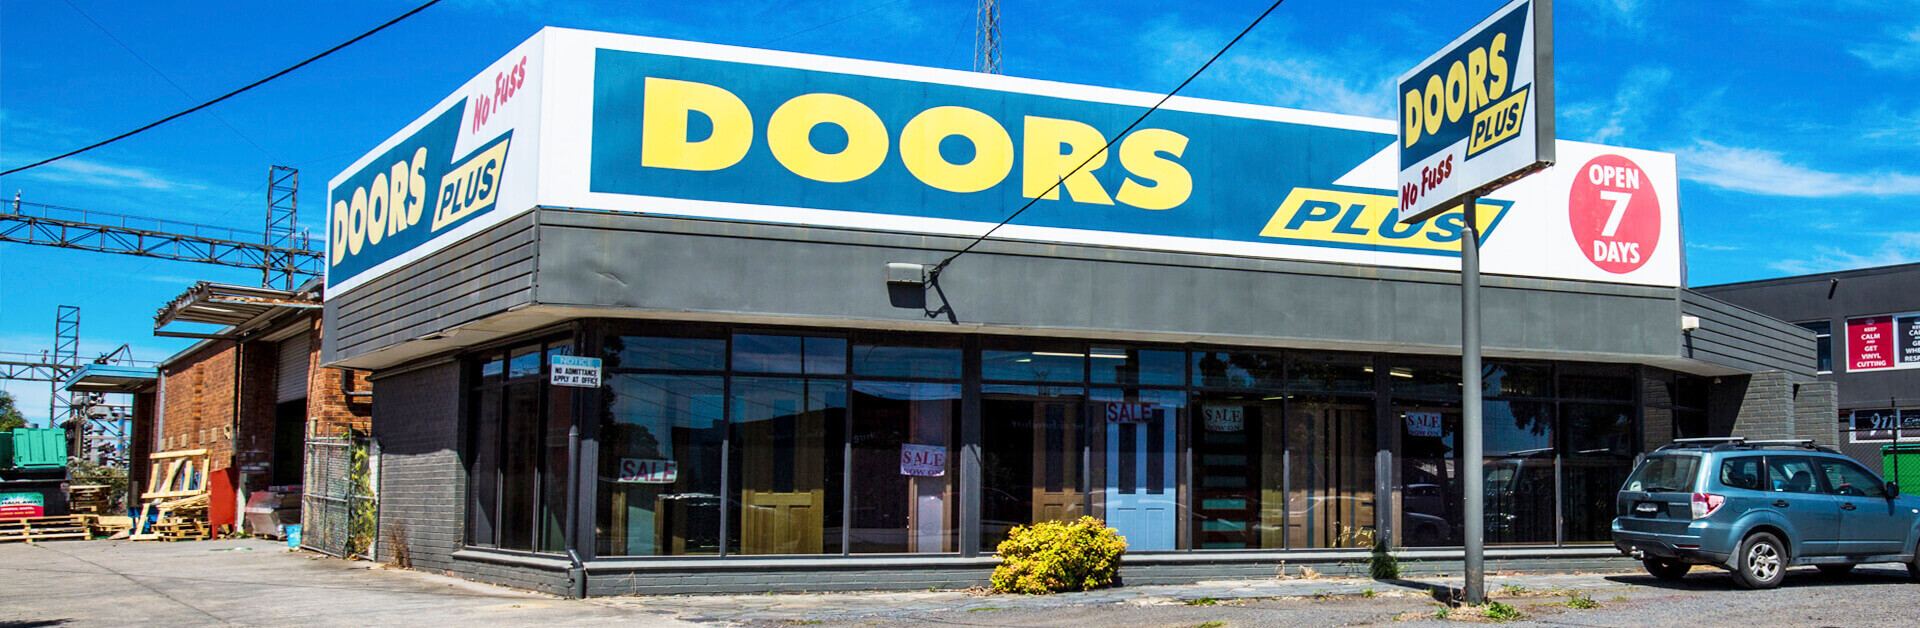 Doors Plus Springvale Showroom in Victoria, Melbourne with car parking